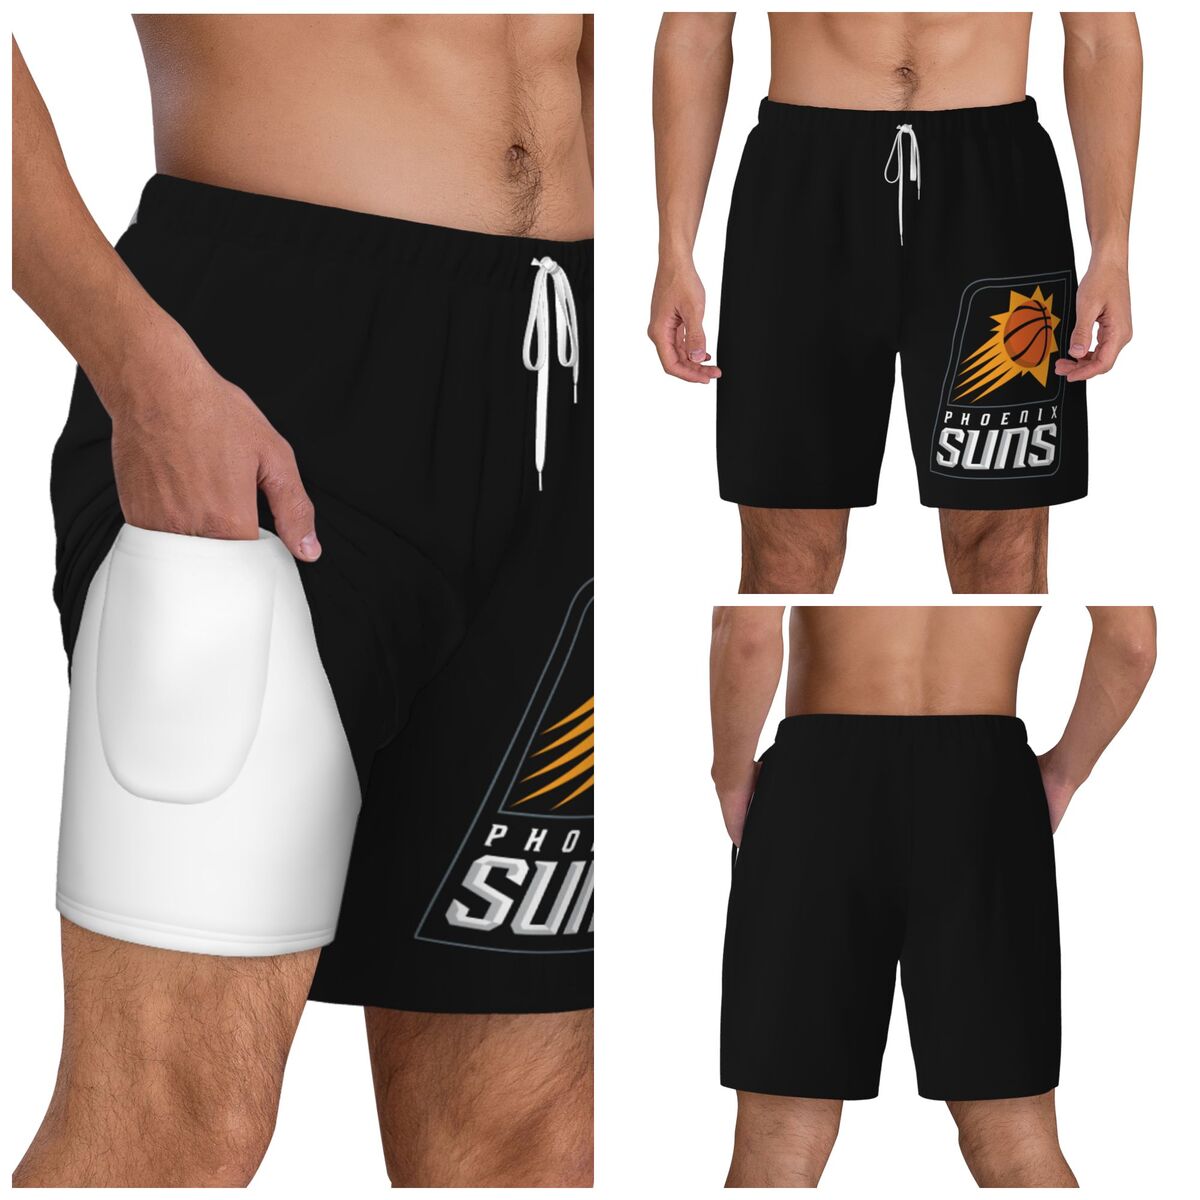 Phoenix Suns Logo Men's Swim Trunks with Compression Liner